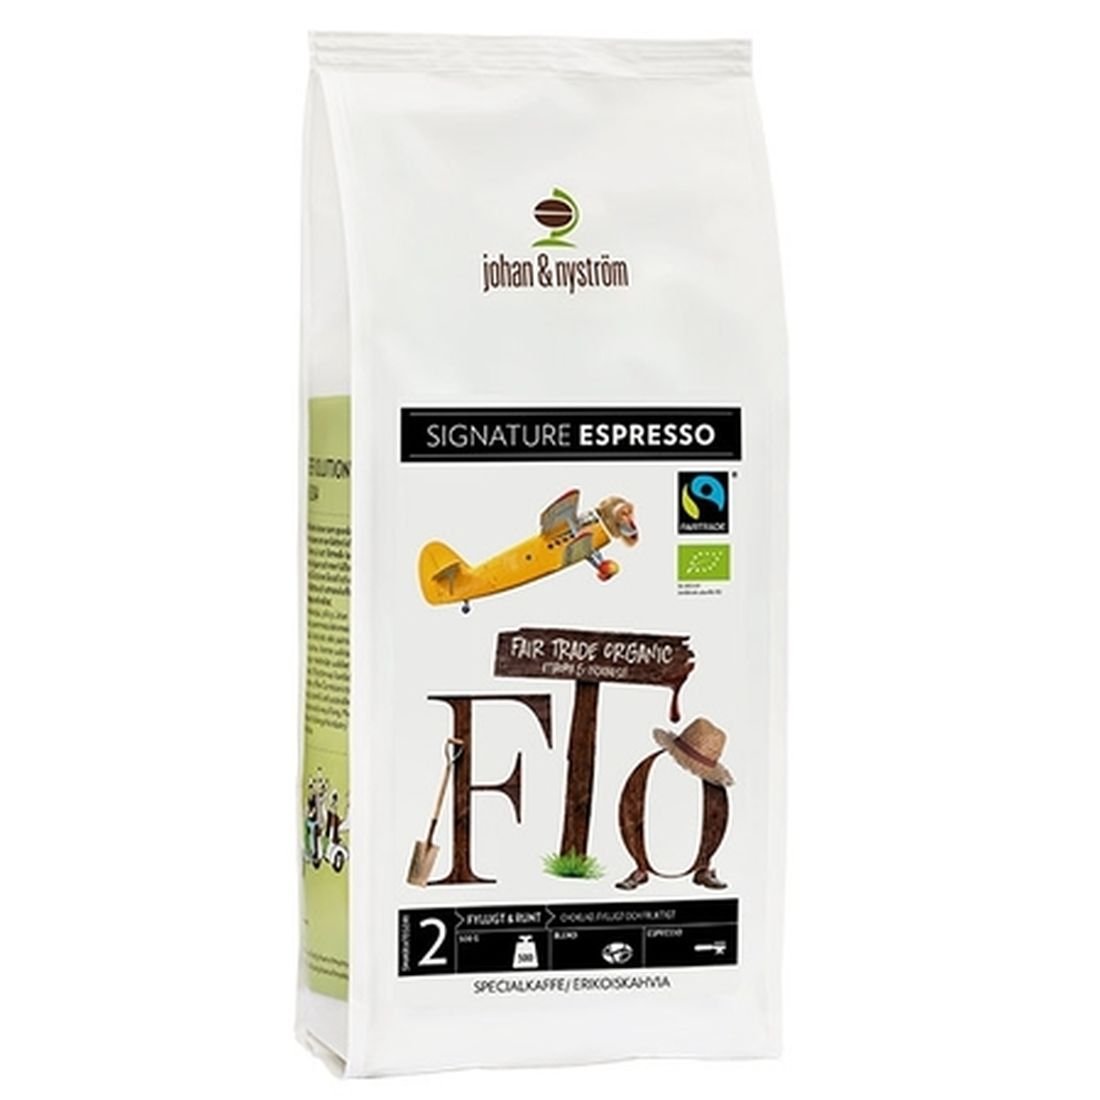 Johan&Nyström Espresso Fairtrade FTO KEFAIR500